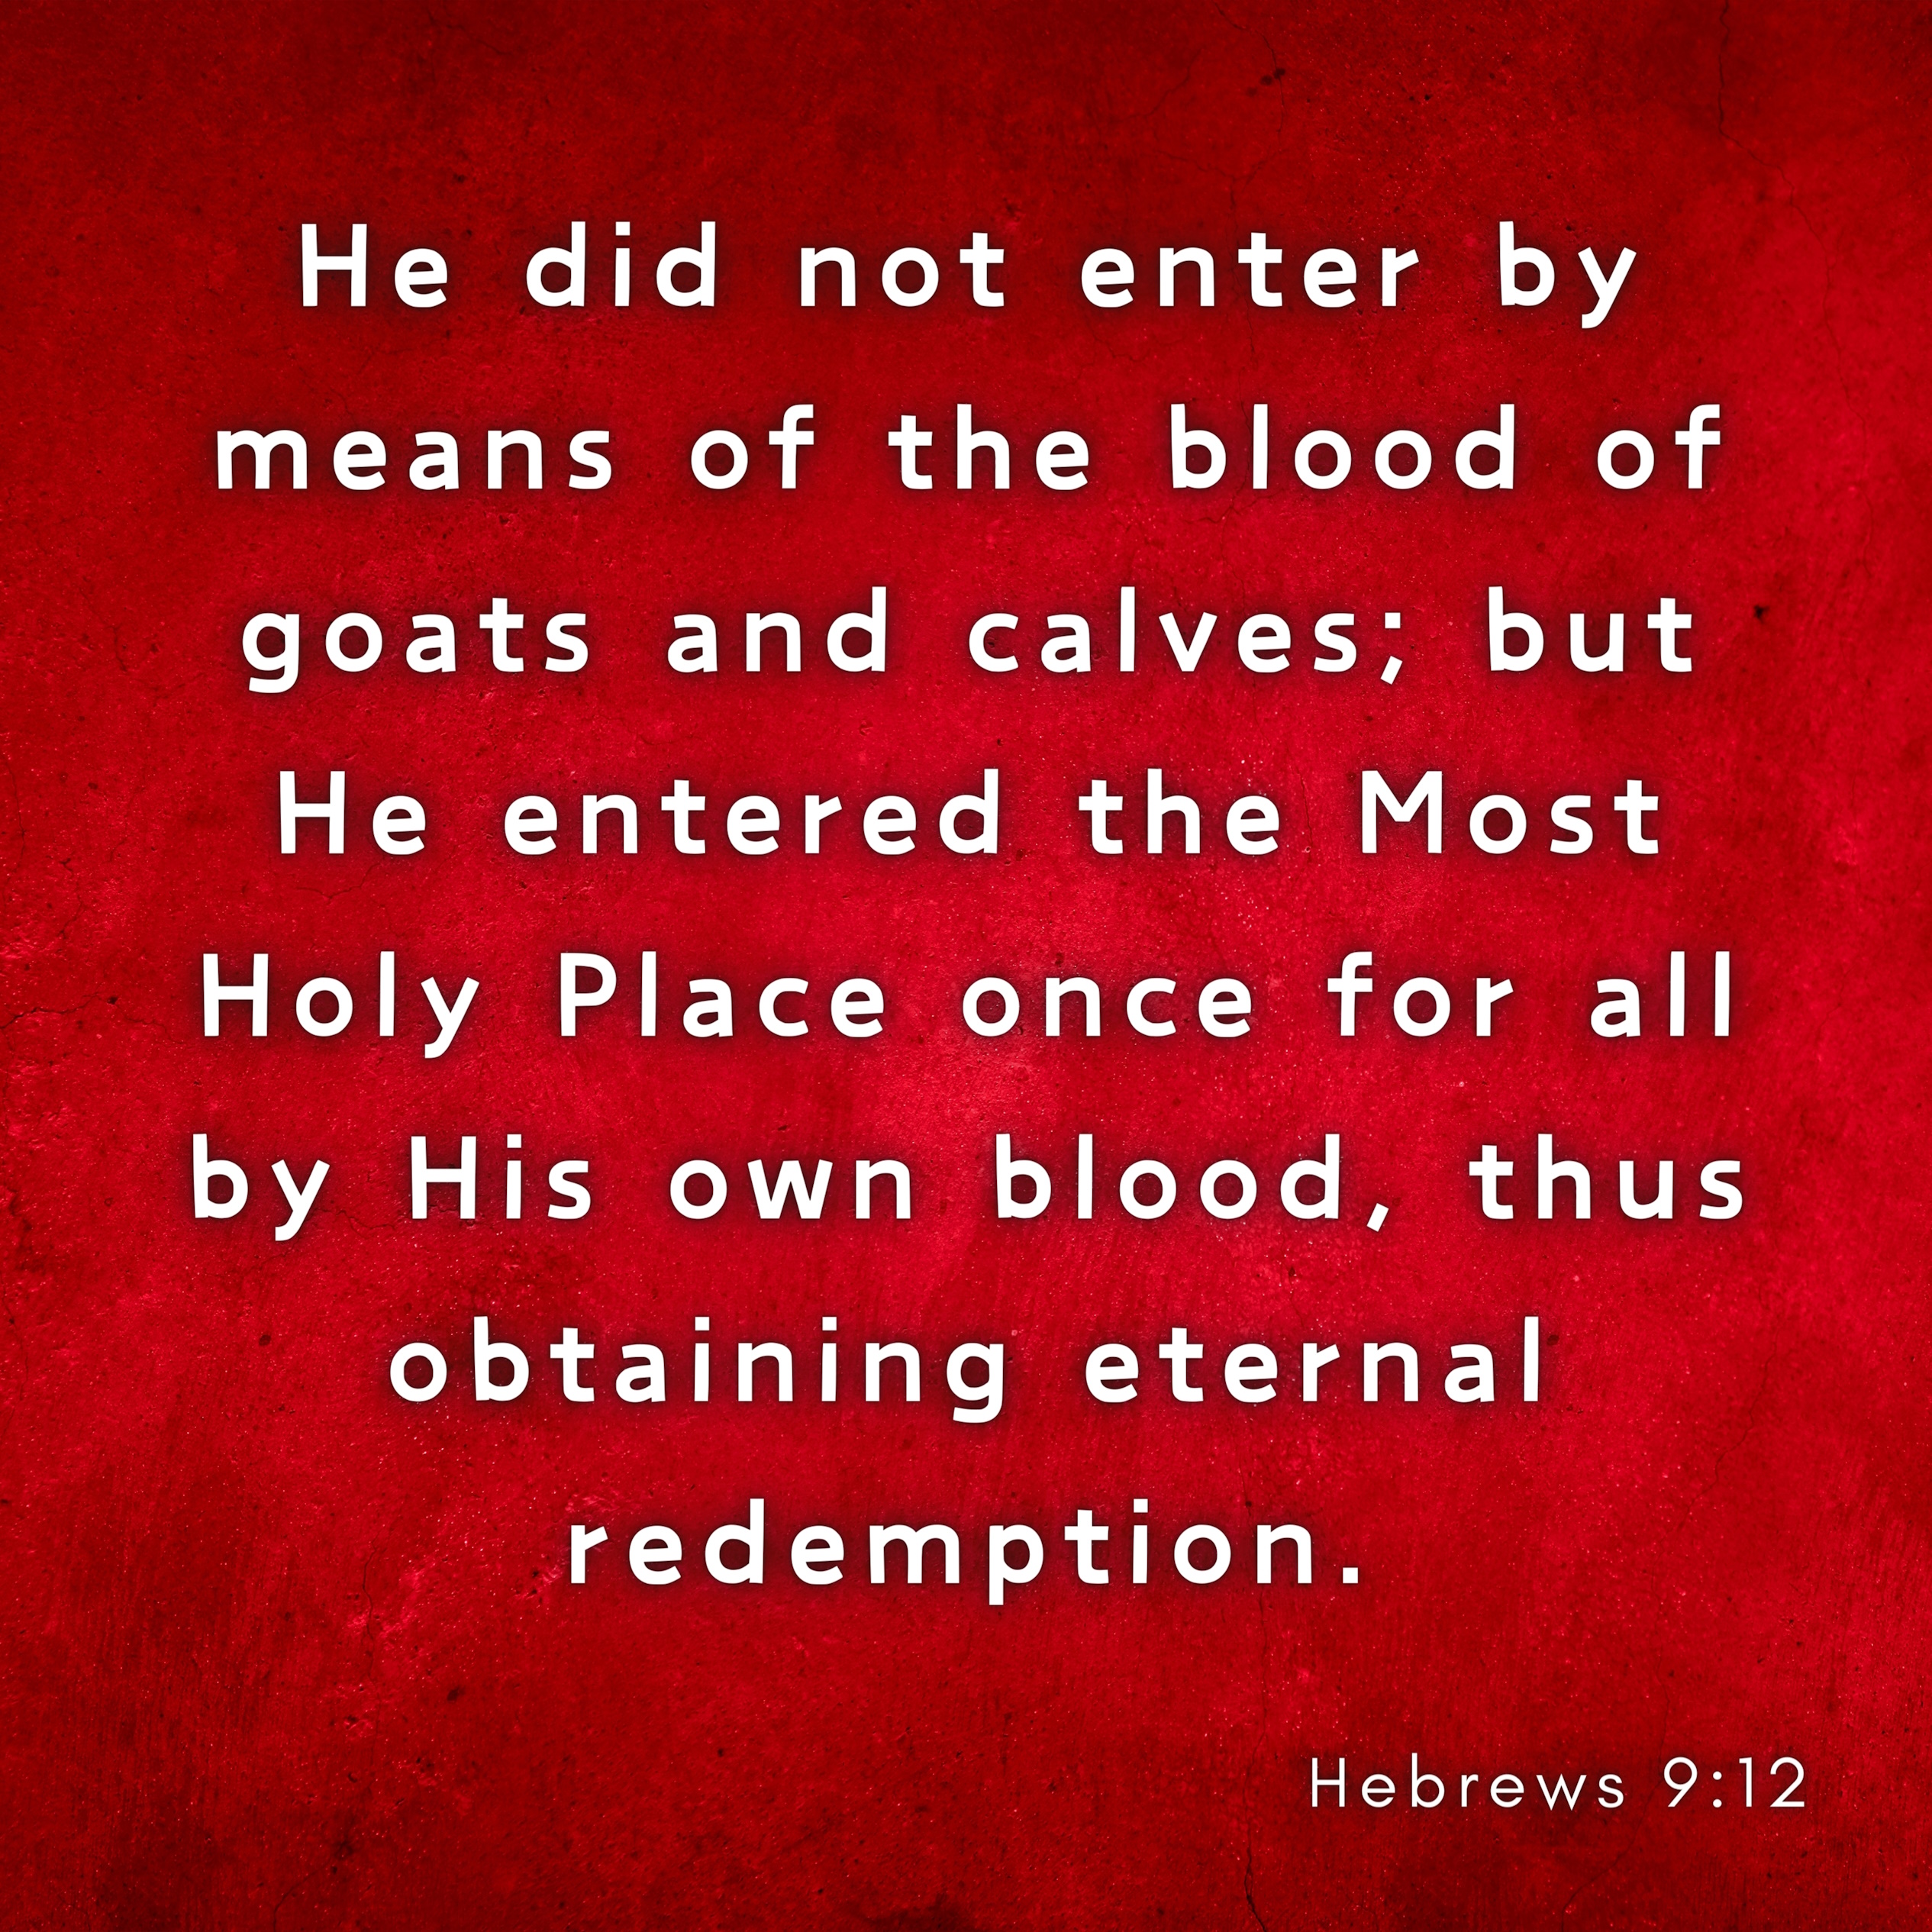 Power of Christ’s Blood: Eternal Redemption